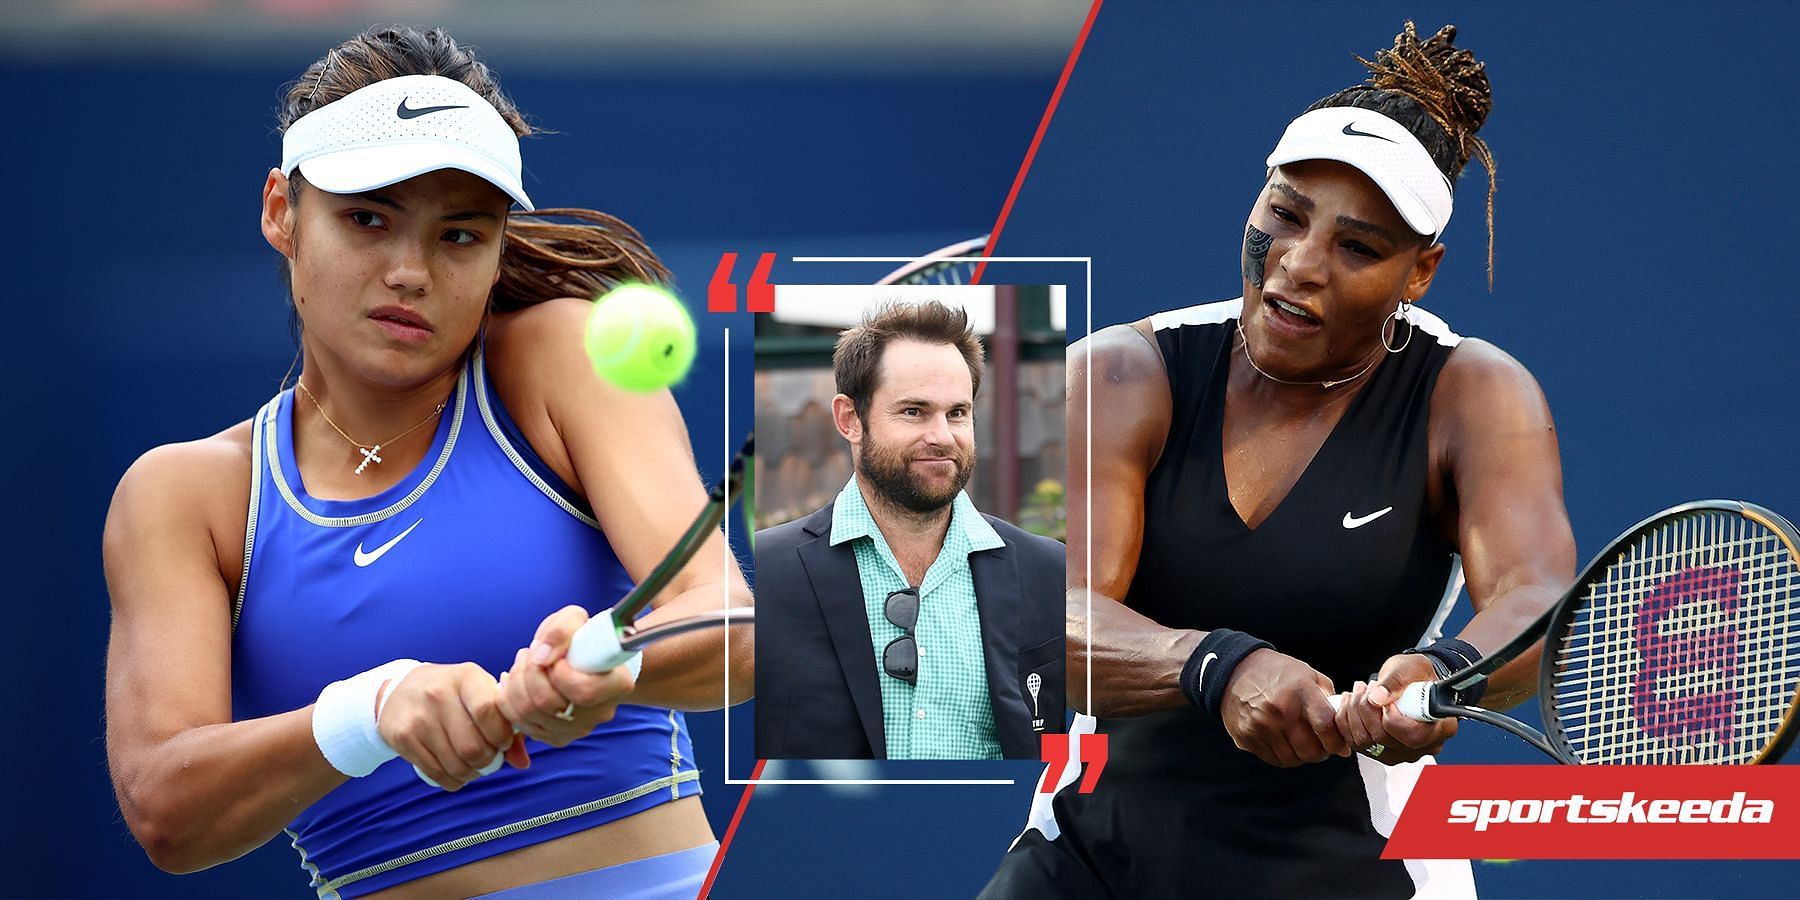 Andy Roddick weighs in on Serena Williams and Emma Raducanu Cincinnati Open 2022 match-up